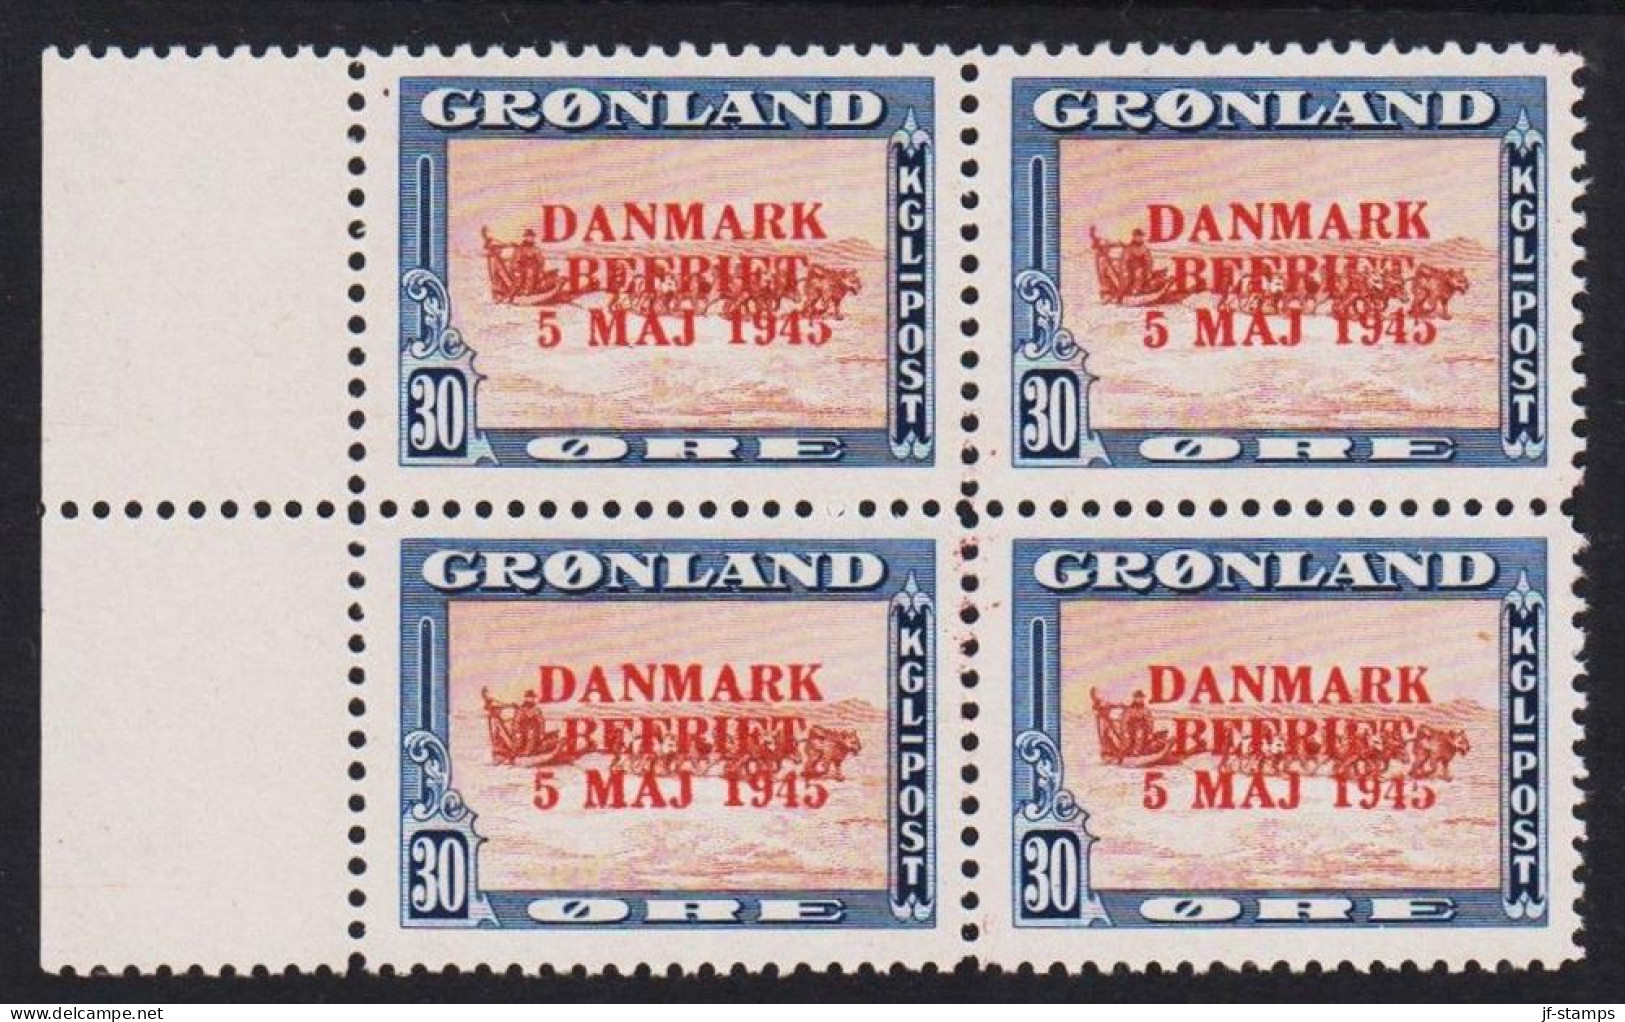 1945. GRØNLAND. DANMARK BEFRIET 5 MAJ 1945 Overprint. 30 Øre Blue/brown/red Dog Sledge. RED ... (Michel 22 I) - JF536979 - Neufs